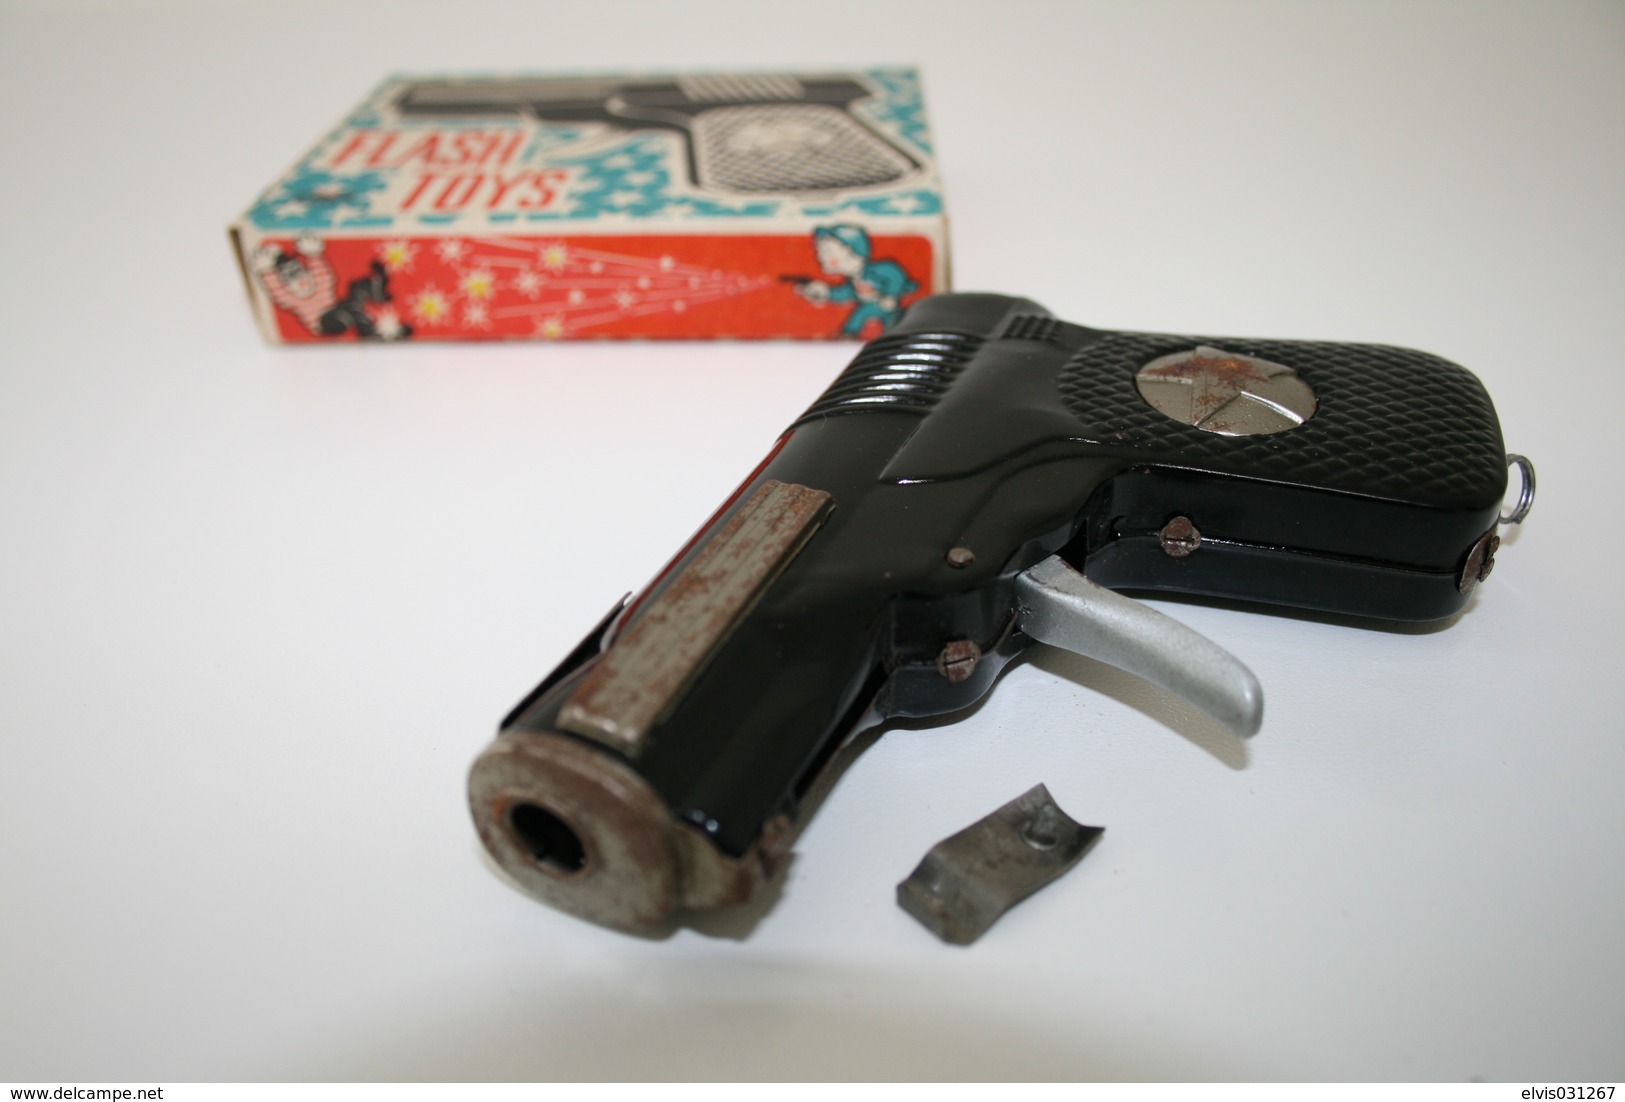 Vintage TOY GUN : MODERN TOYS - L=12cm - 1950-60s - Keywords : Cap Gun - Cork Gun - Rifle - Revolver - Pistol - Tin - Sammlerwaffen